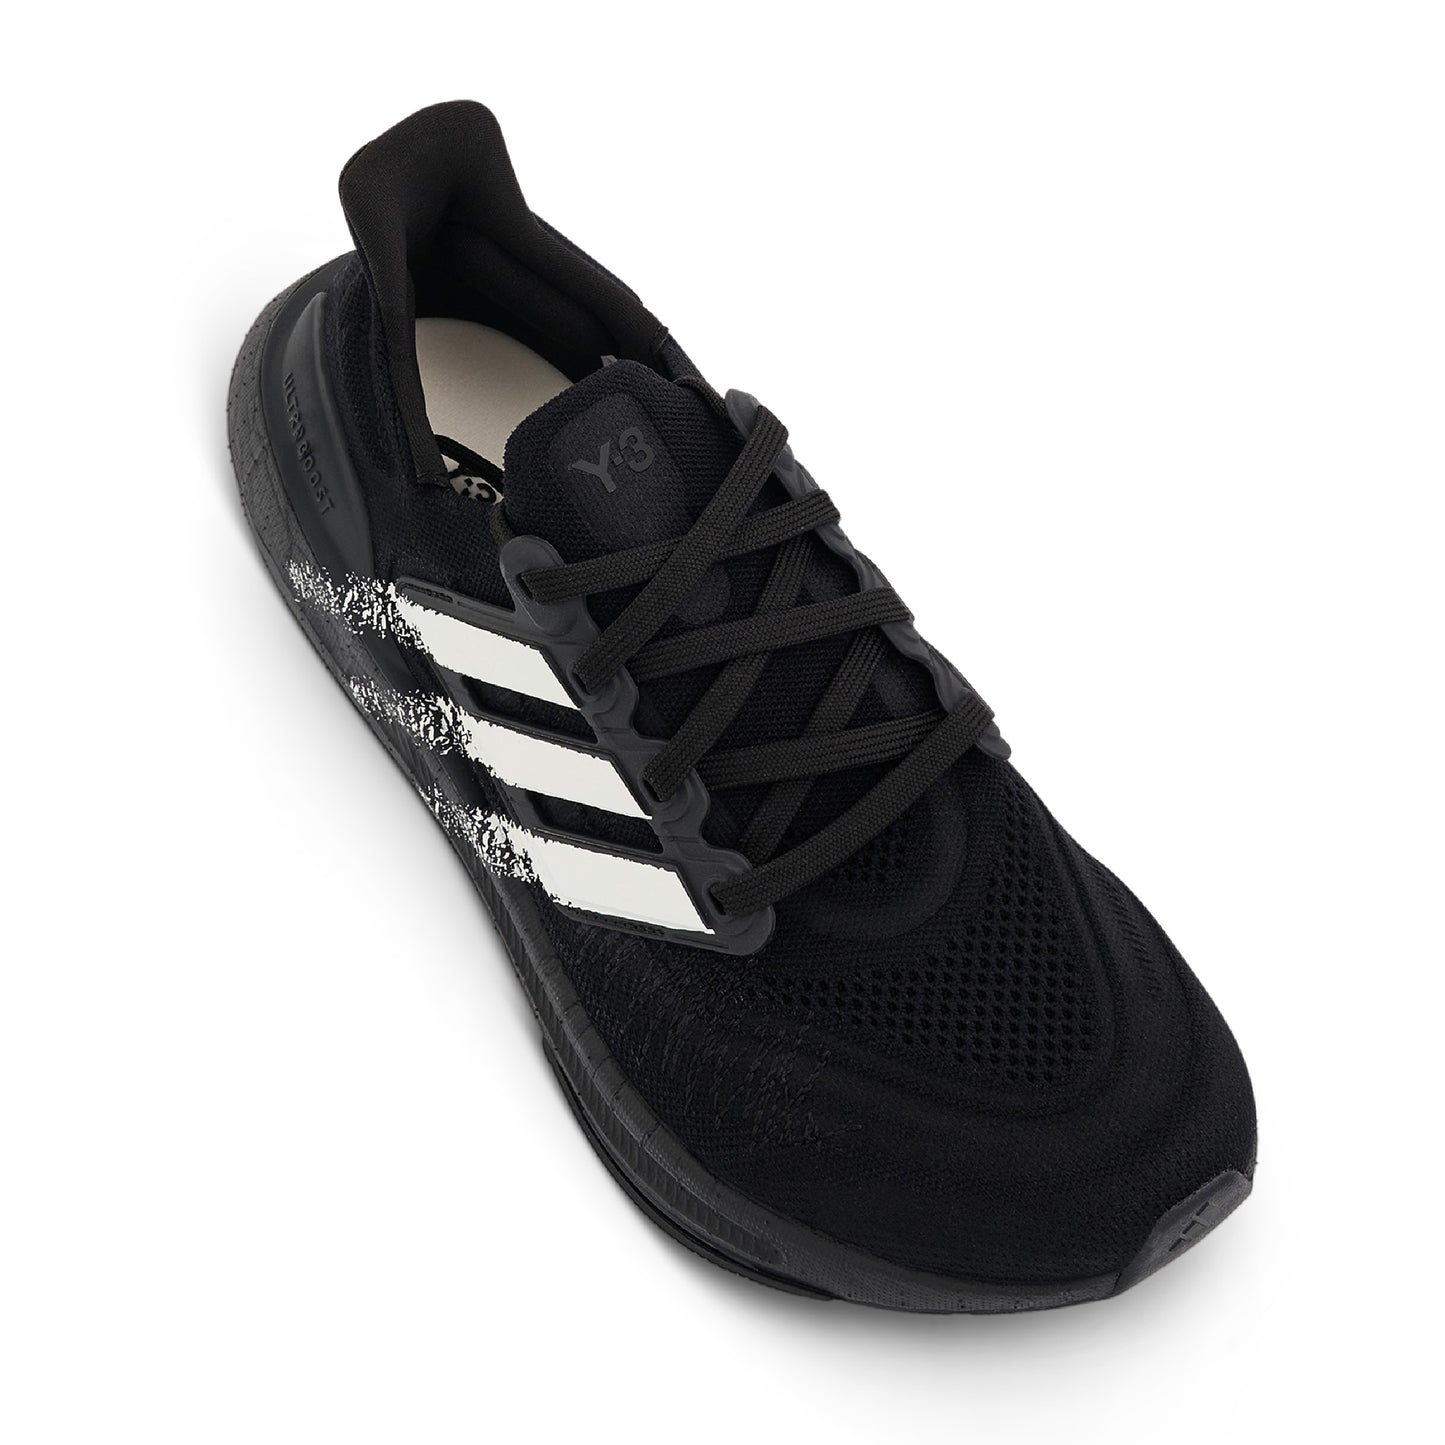 Ultraboost Light Sneakers in Black/White